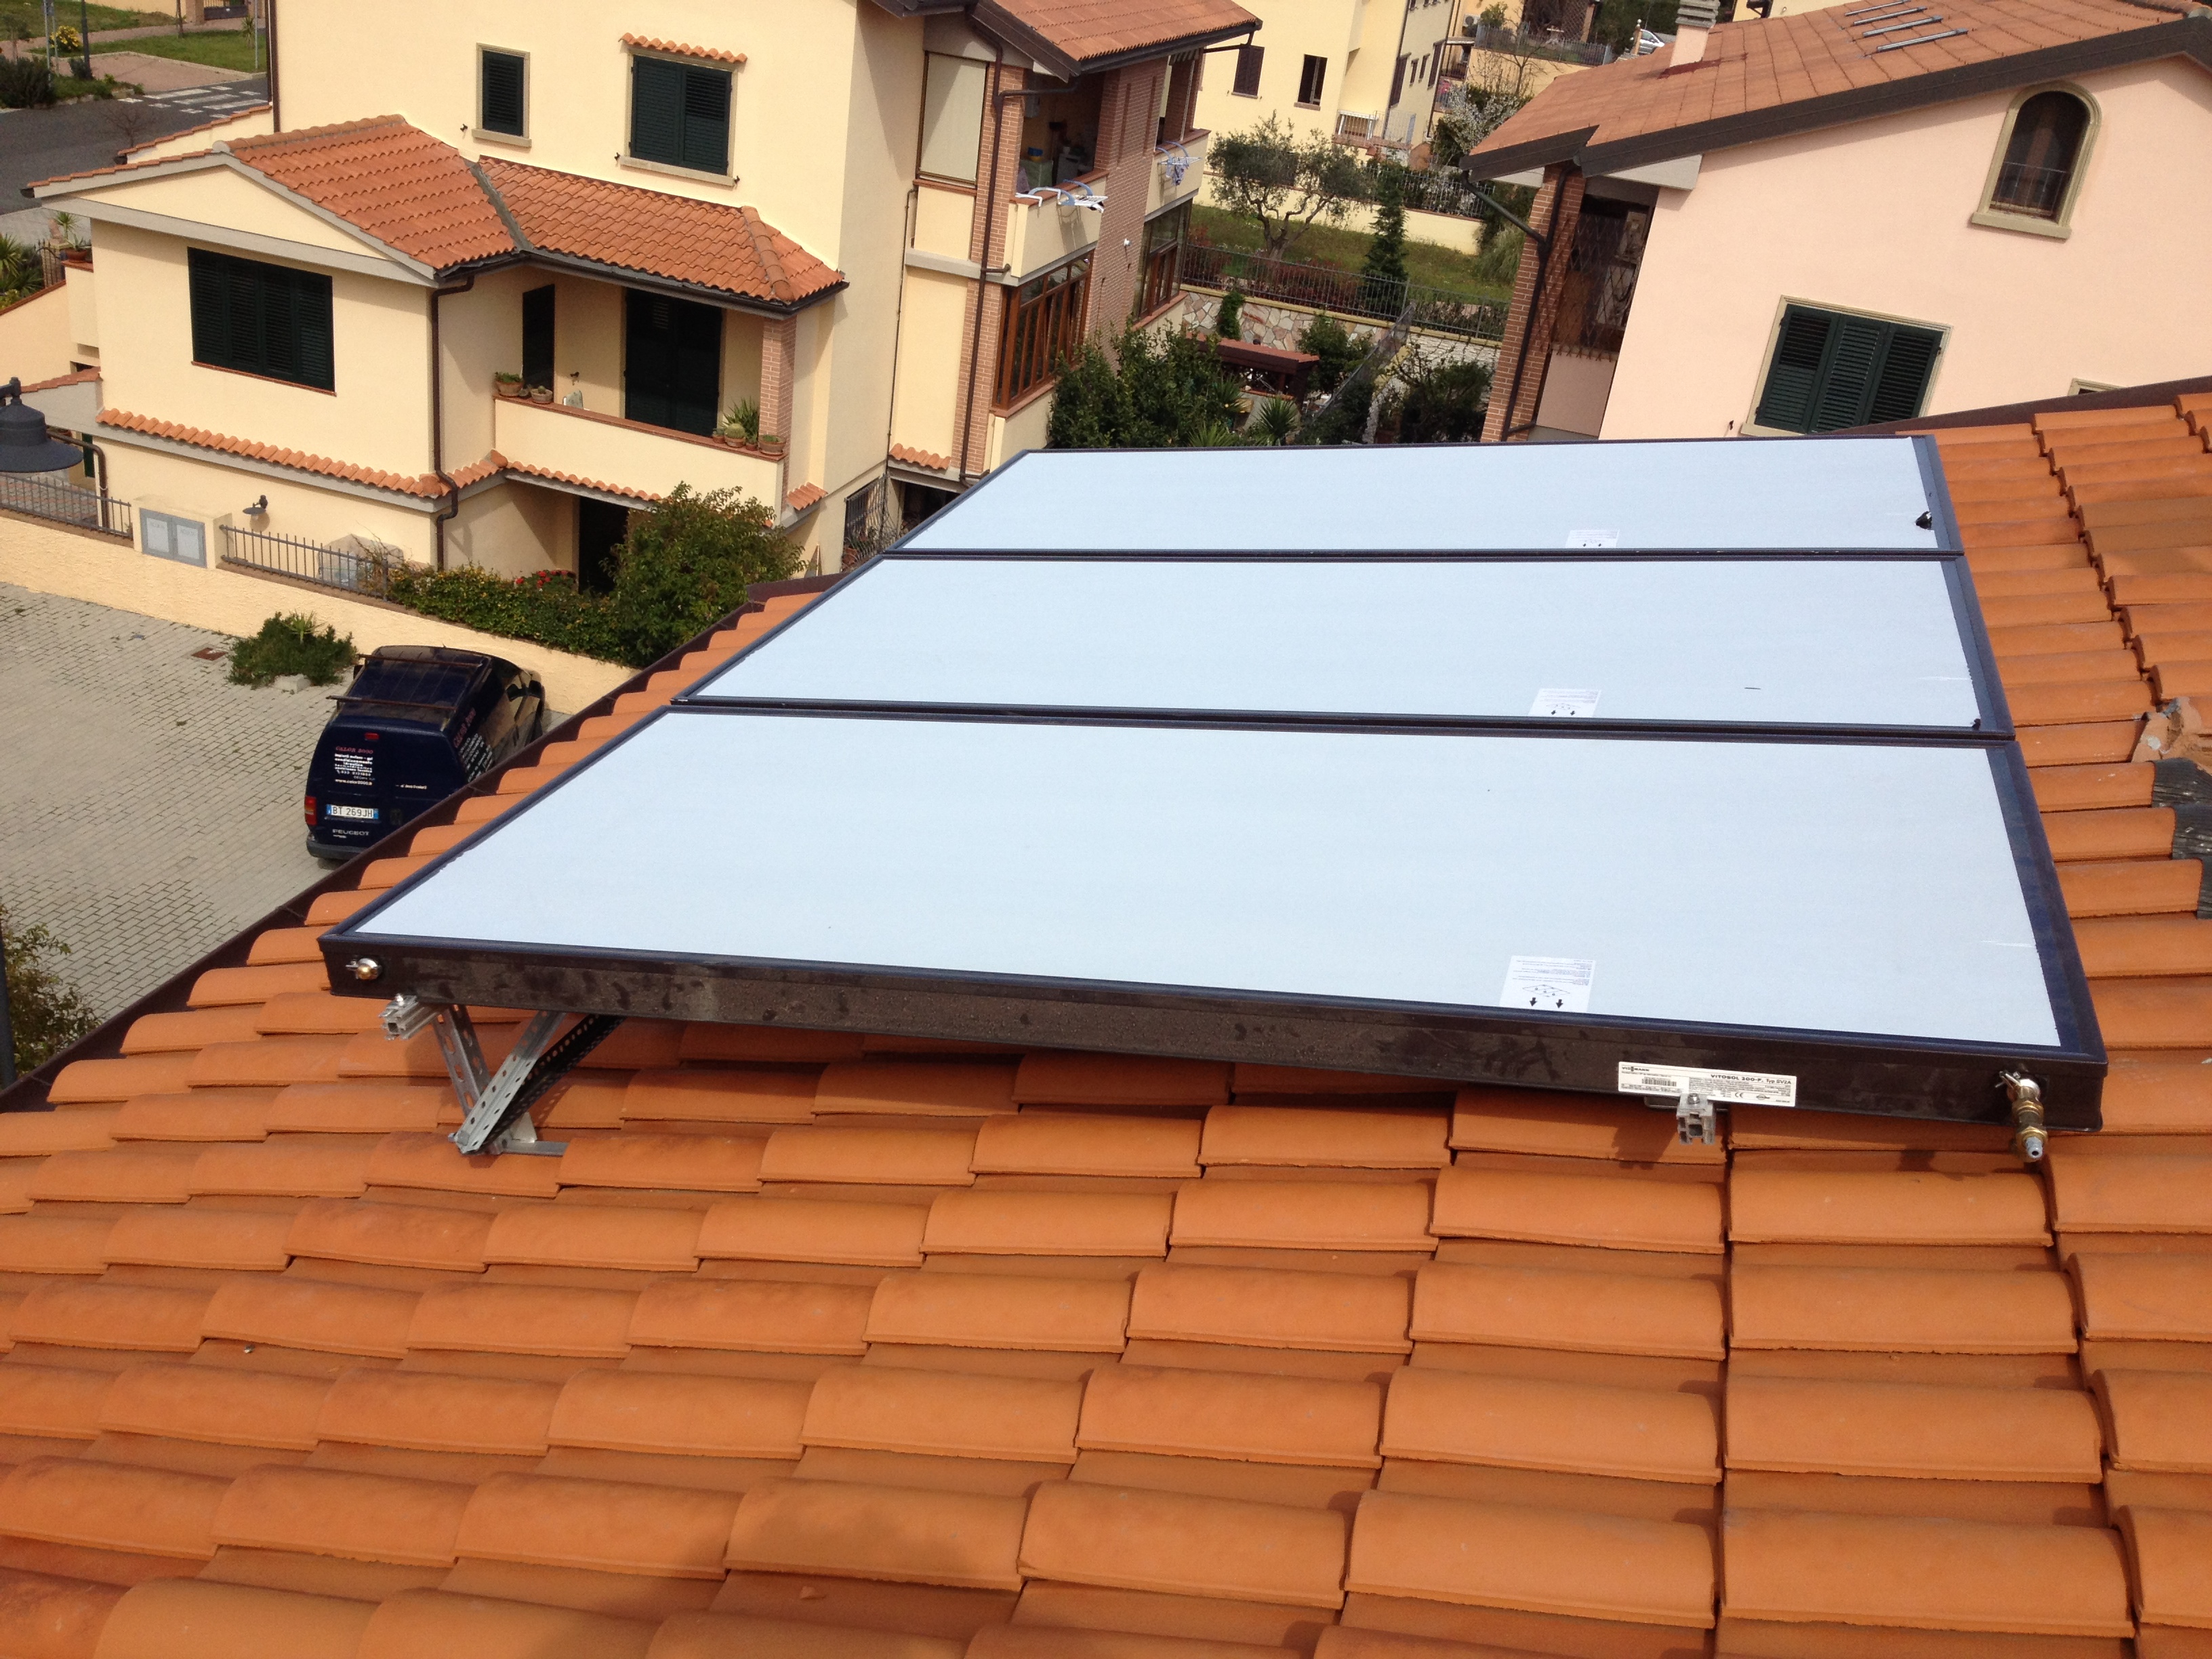 impianto solare termico per casa ad alta efficienza energetica